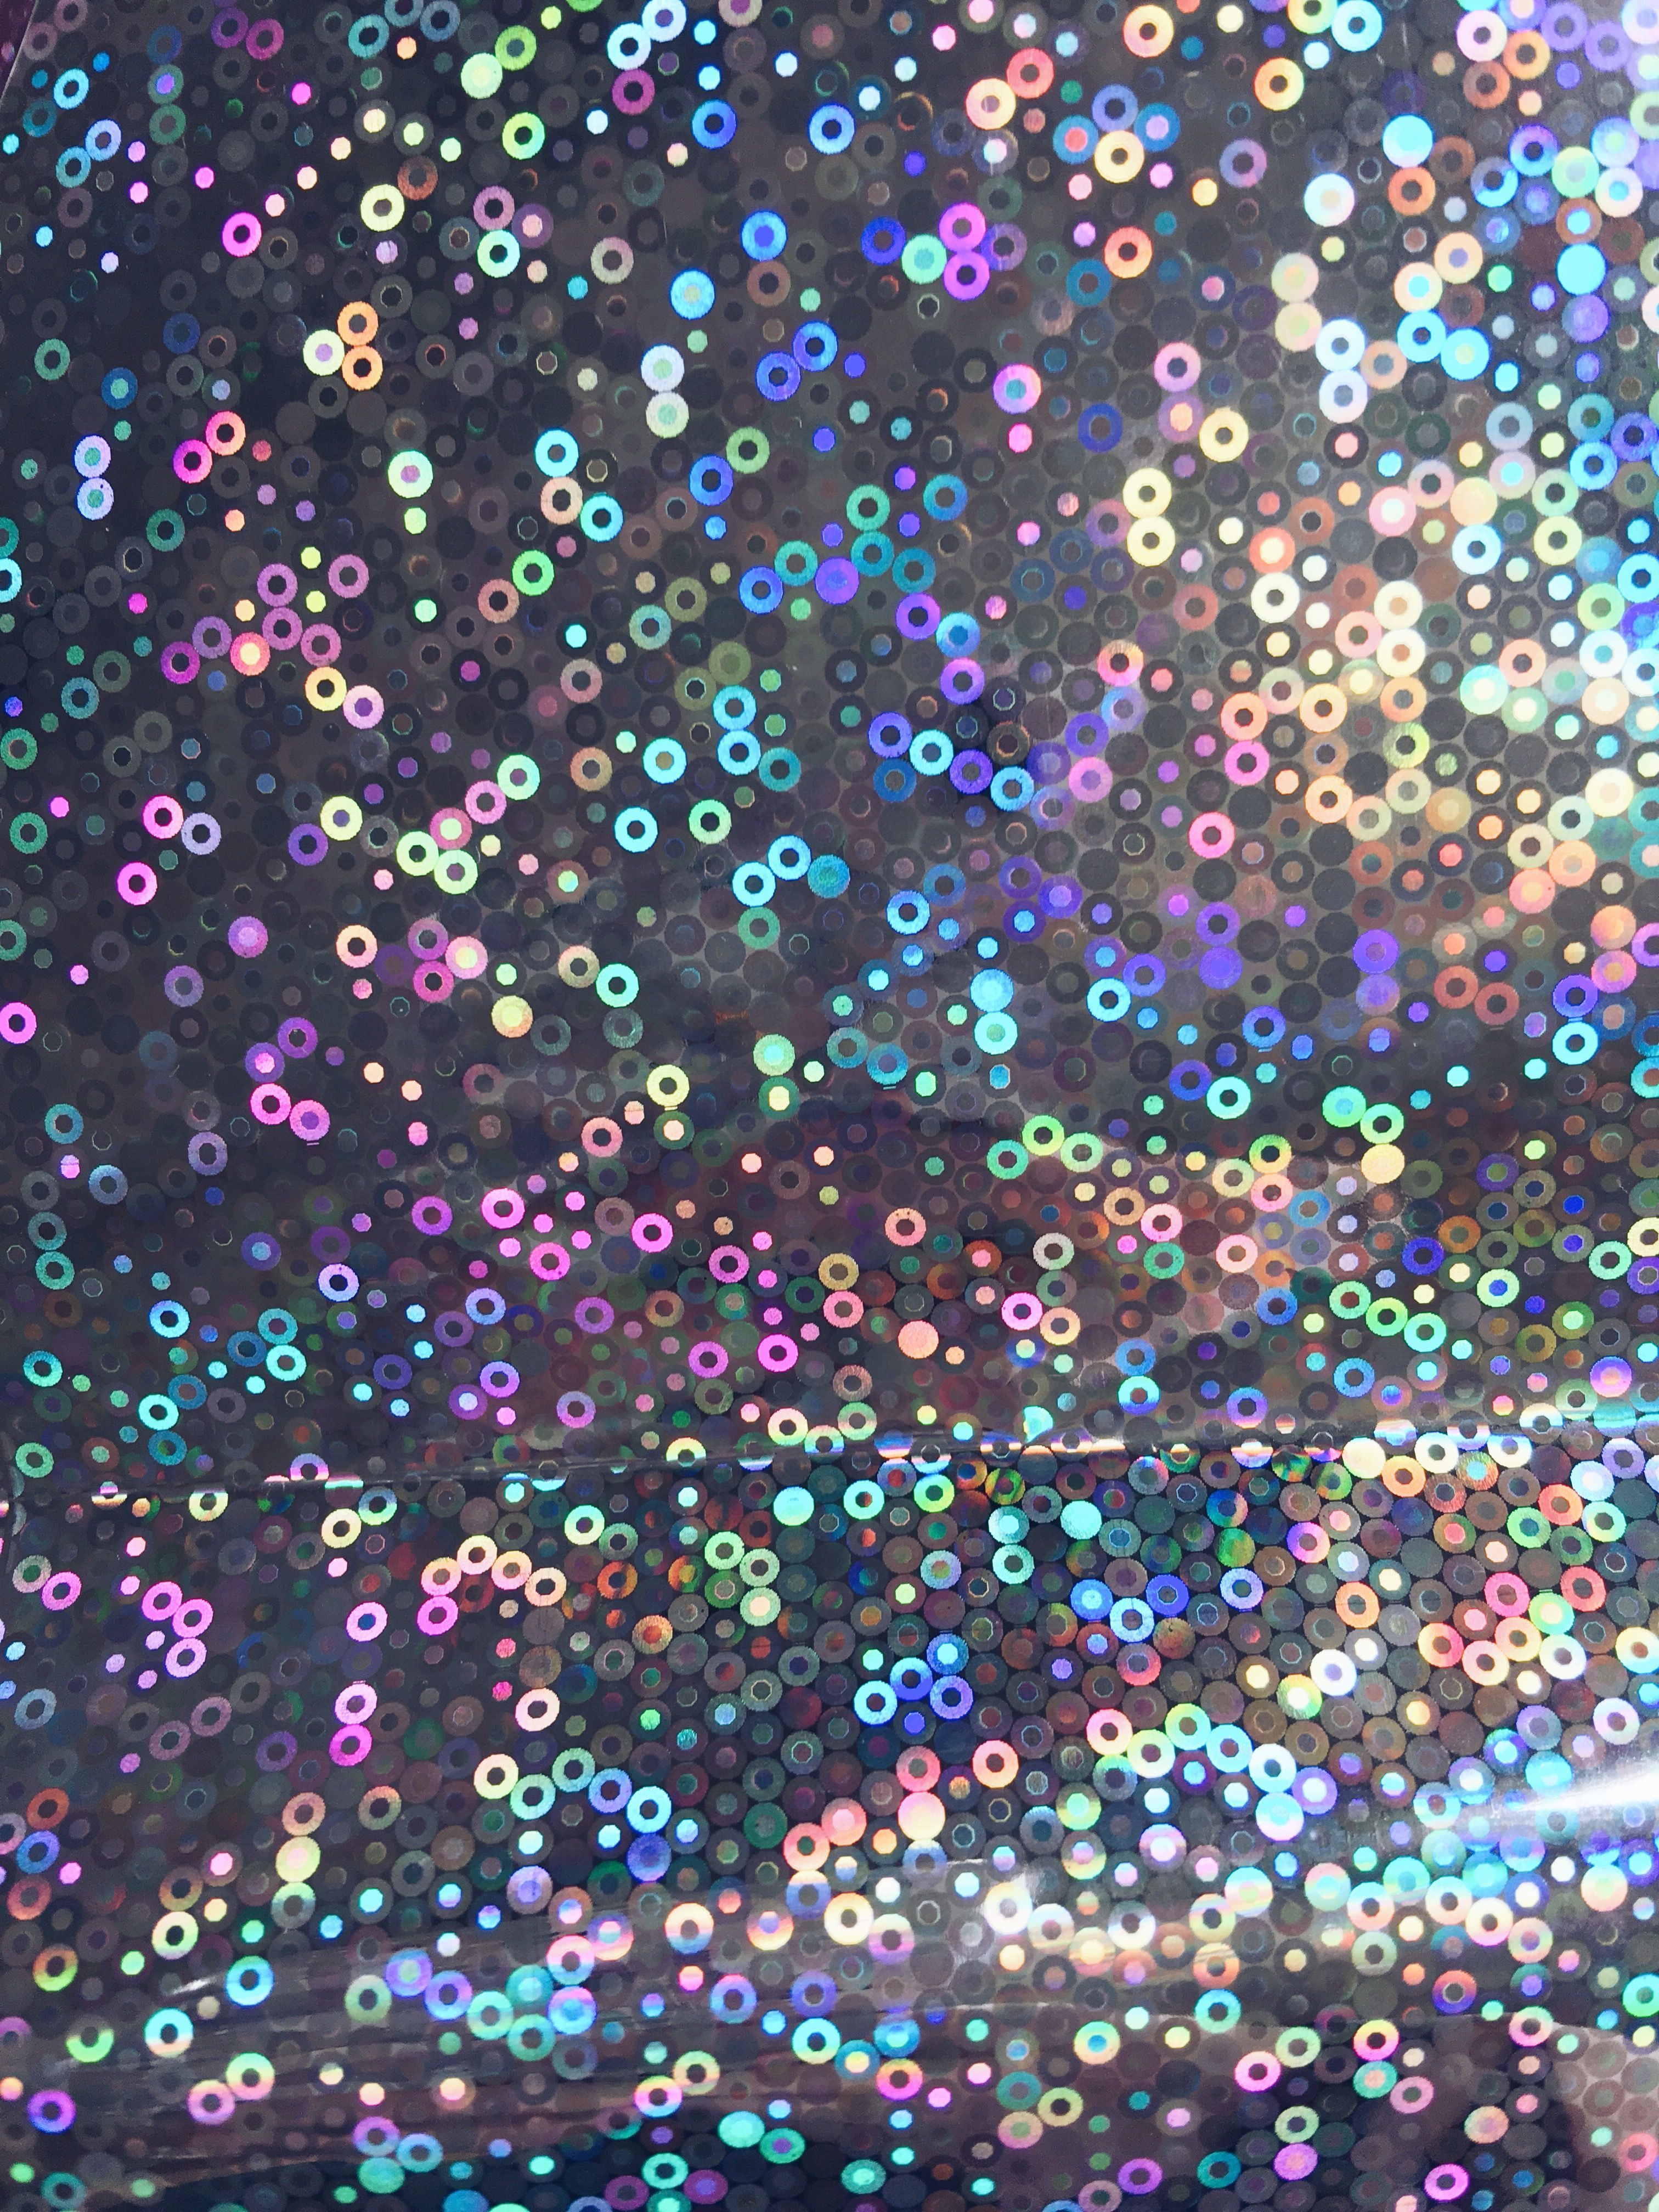 Holographic Glitter Desktop Wallpaper Free Holographic Glitter Desktop Background